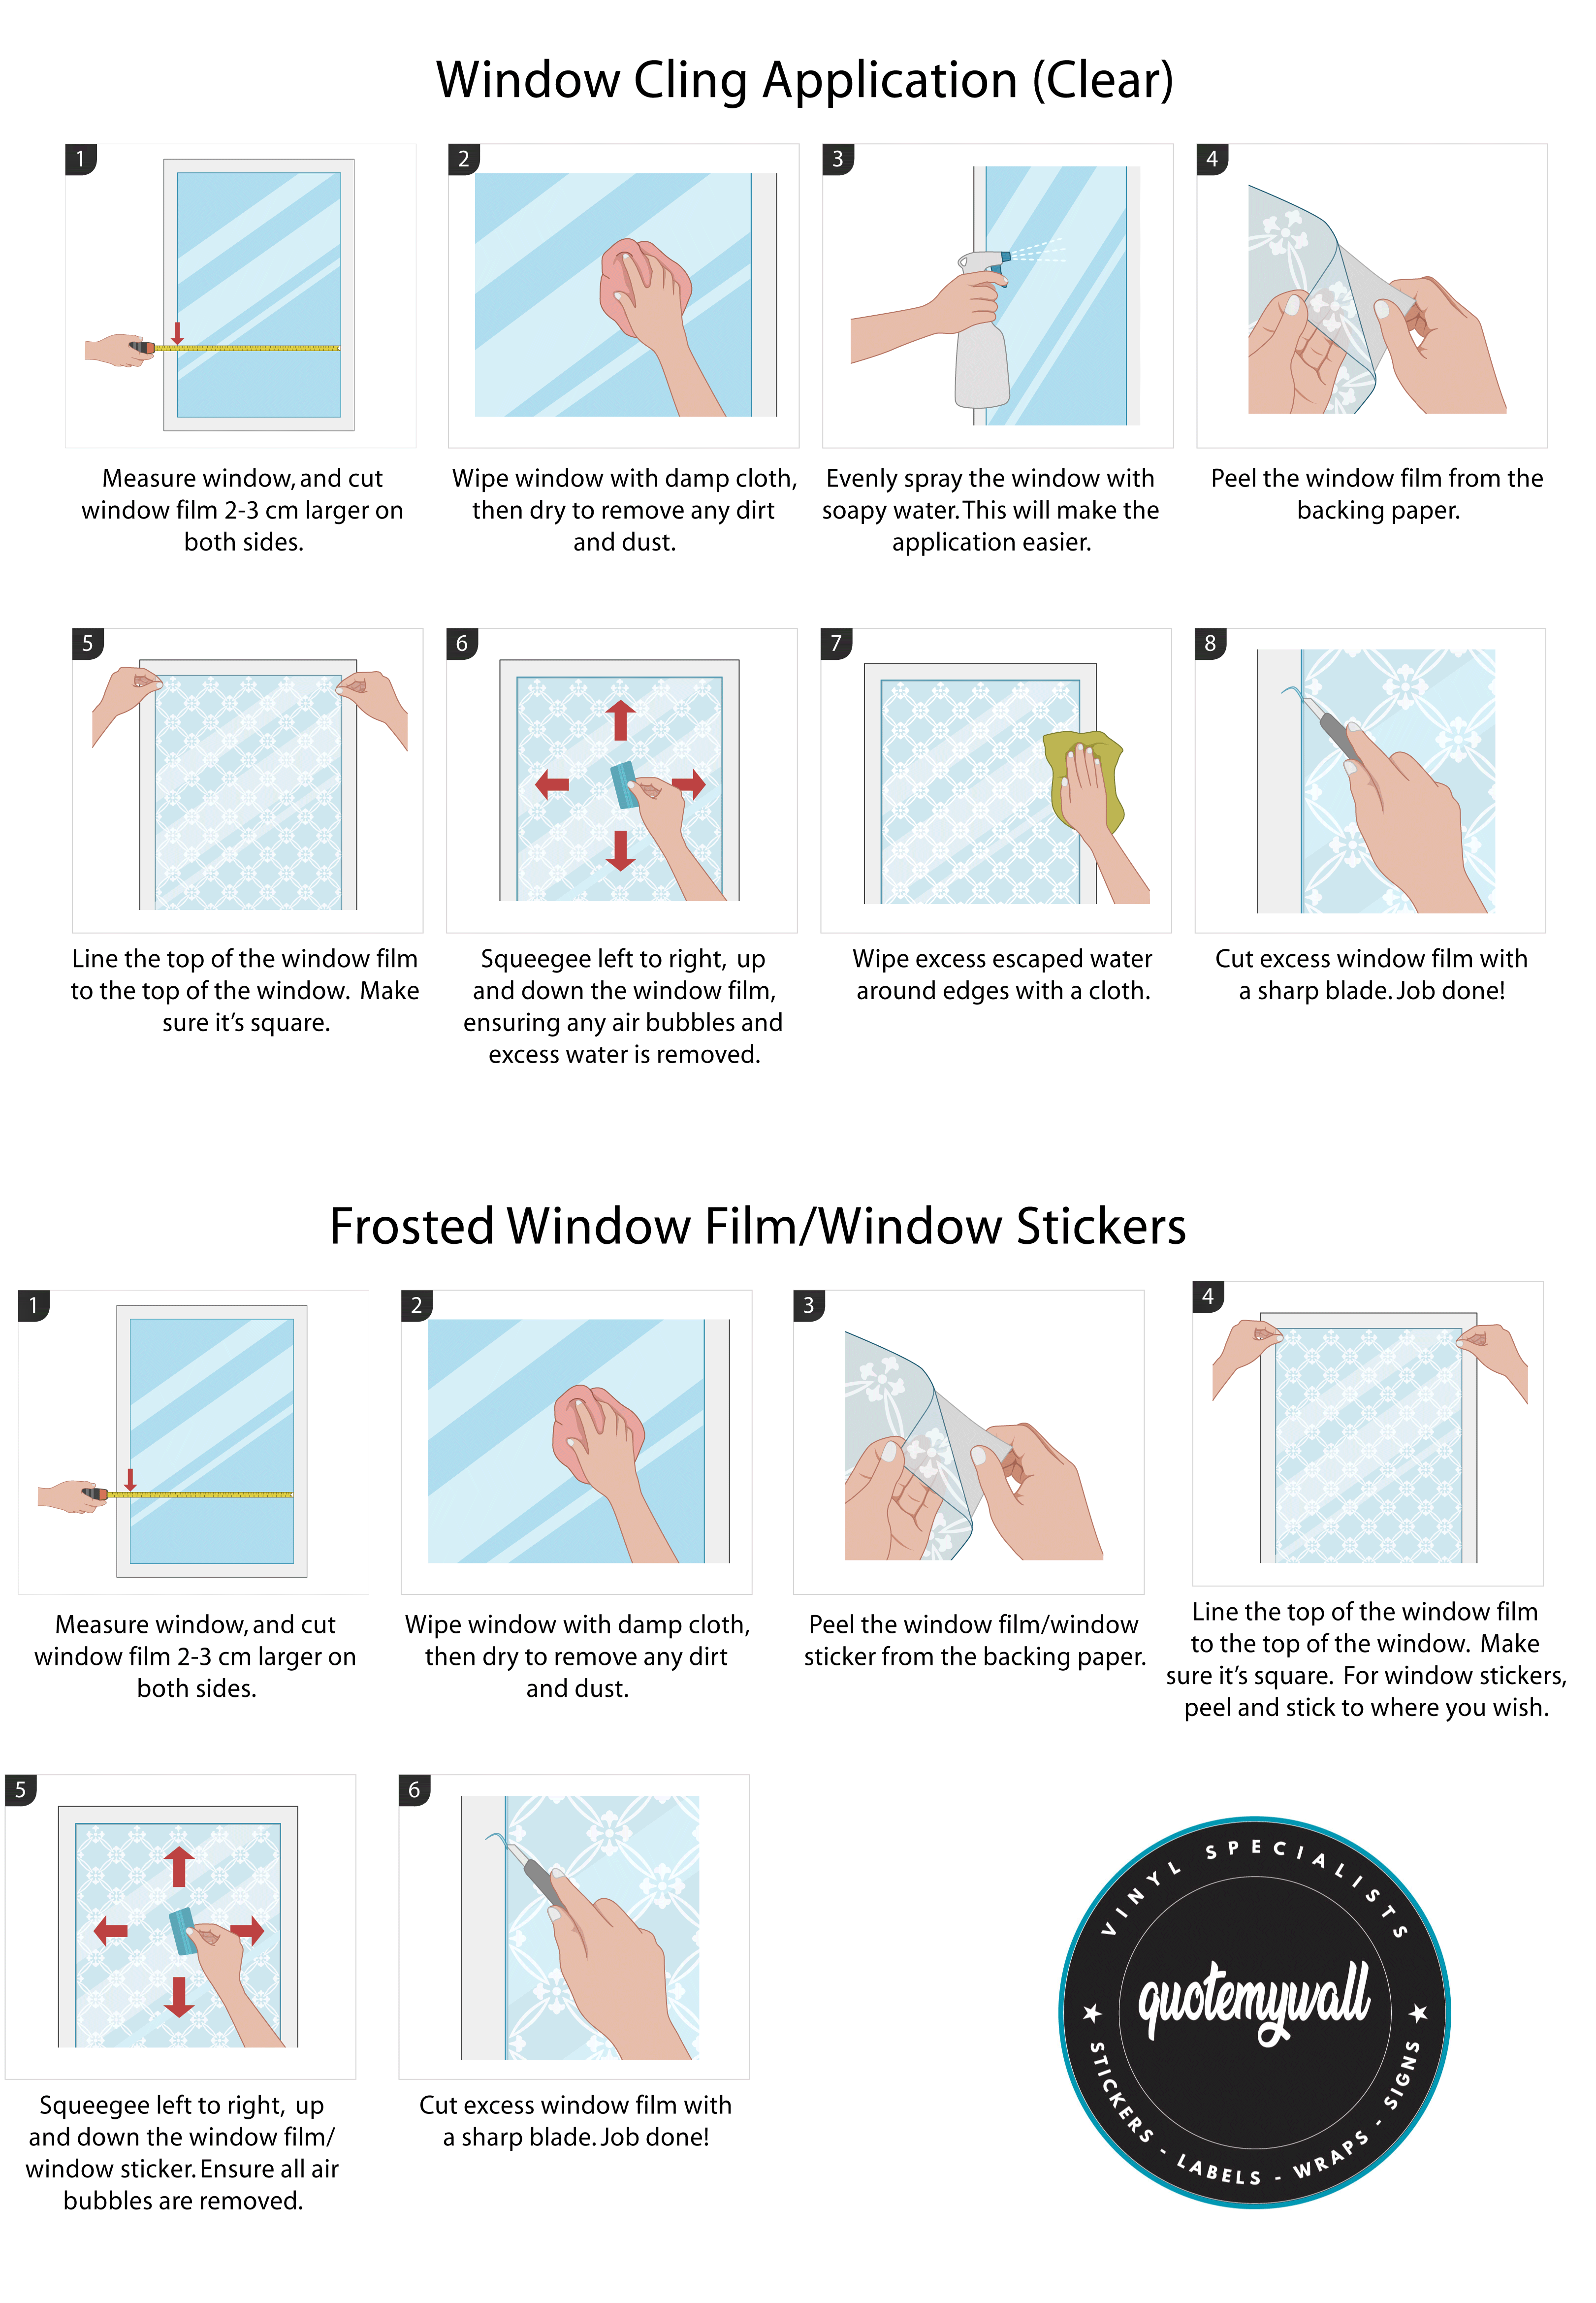 How to apply Window Film 